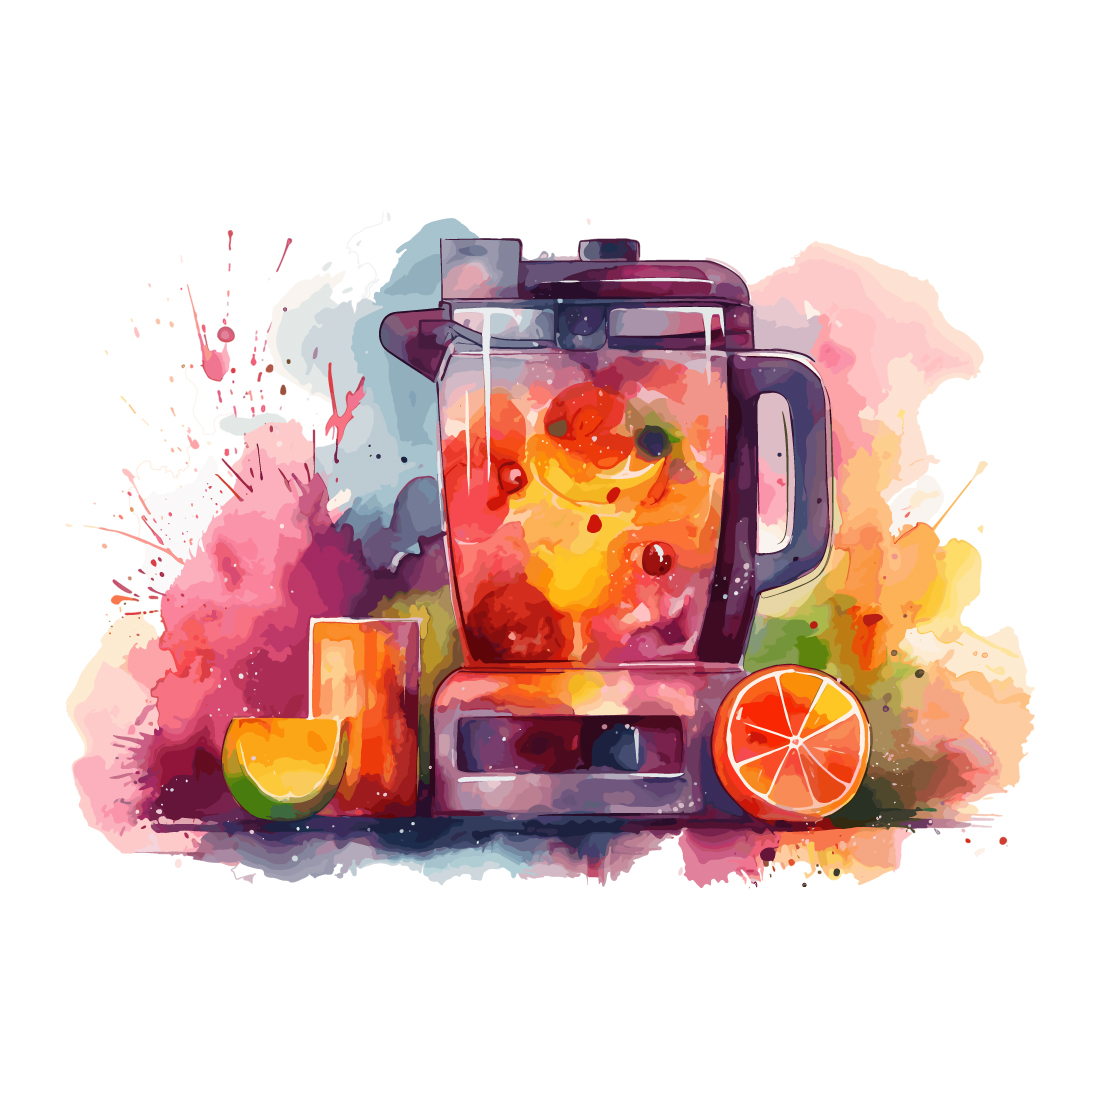 saydurf blender making juice colorful background watercolor b660683c 7439 40d6 b65a 57dc53ff7f91 691